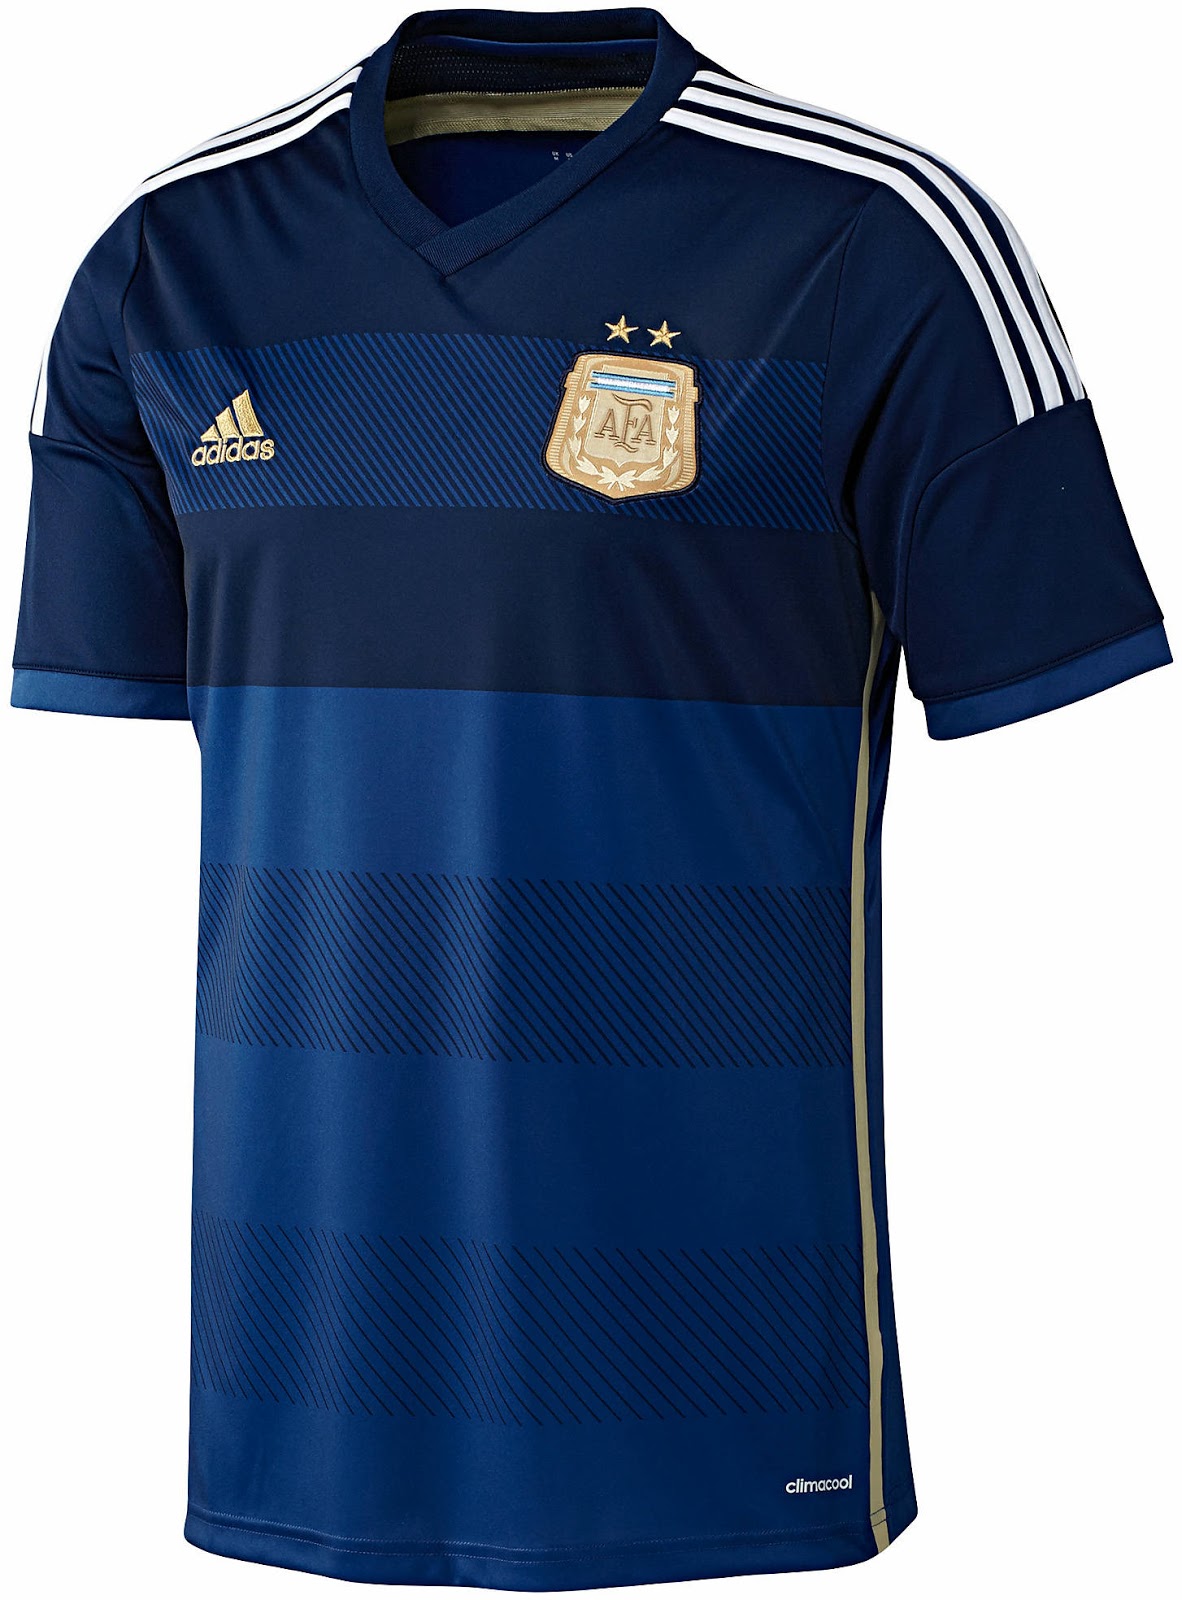 Argentina+2014+World+Cup+Away+Kit+(1).jpg